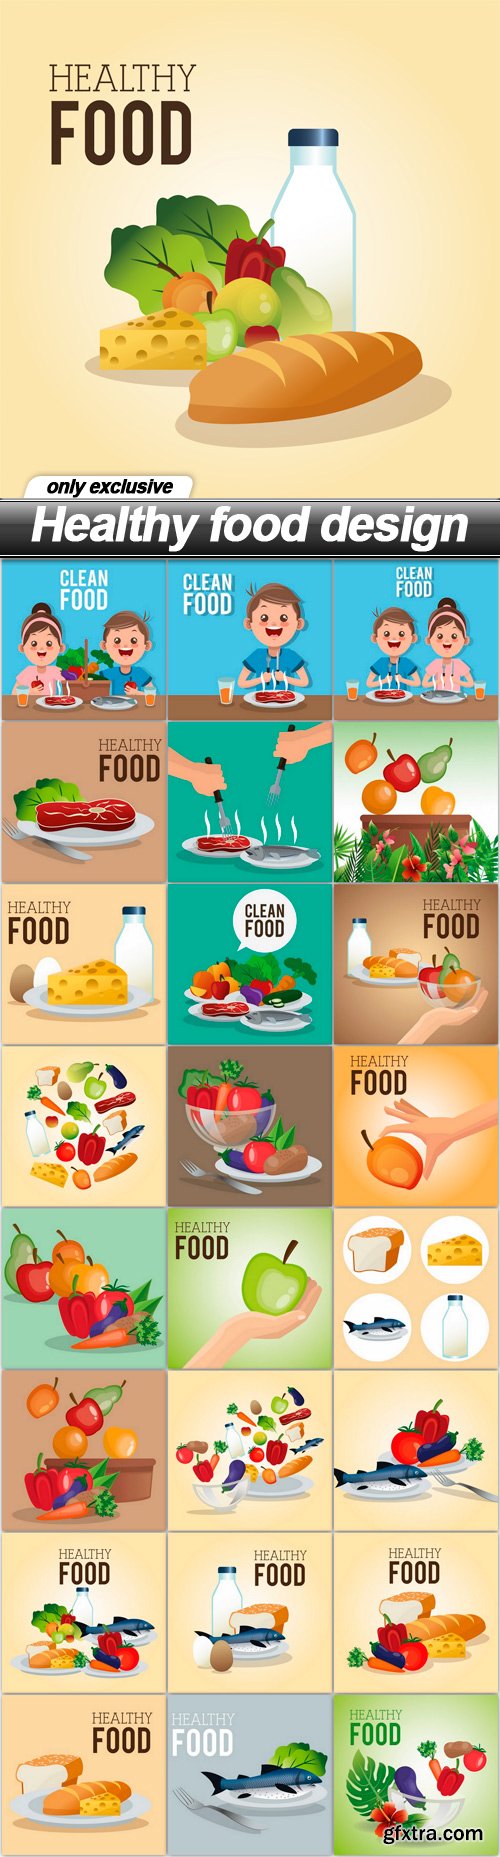 Healthy food design - 25 EPS